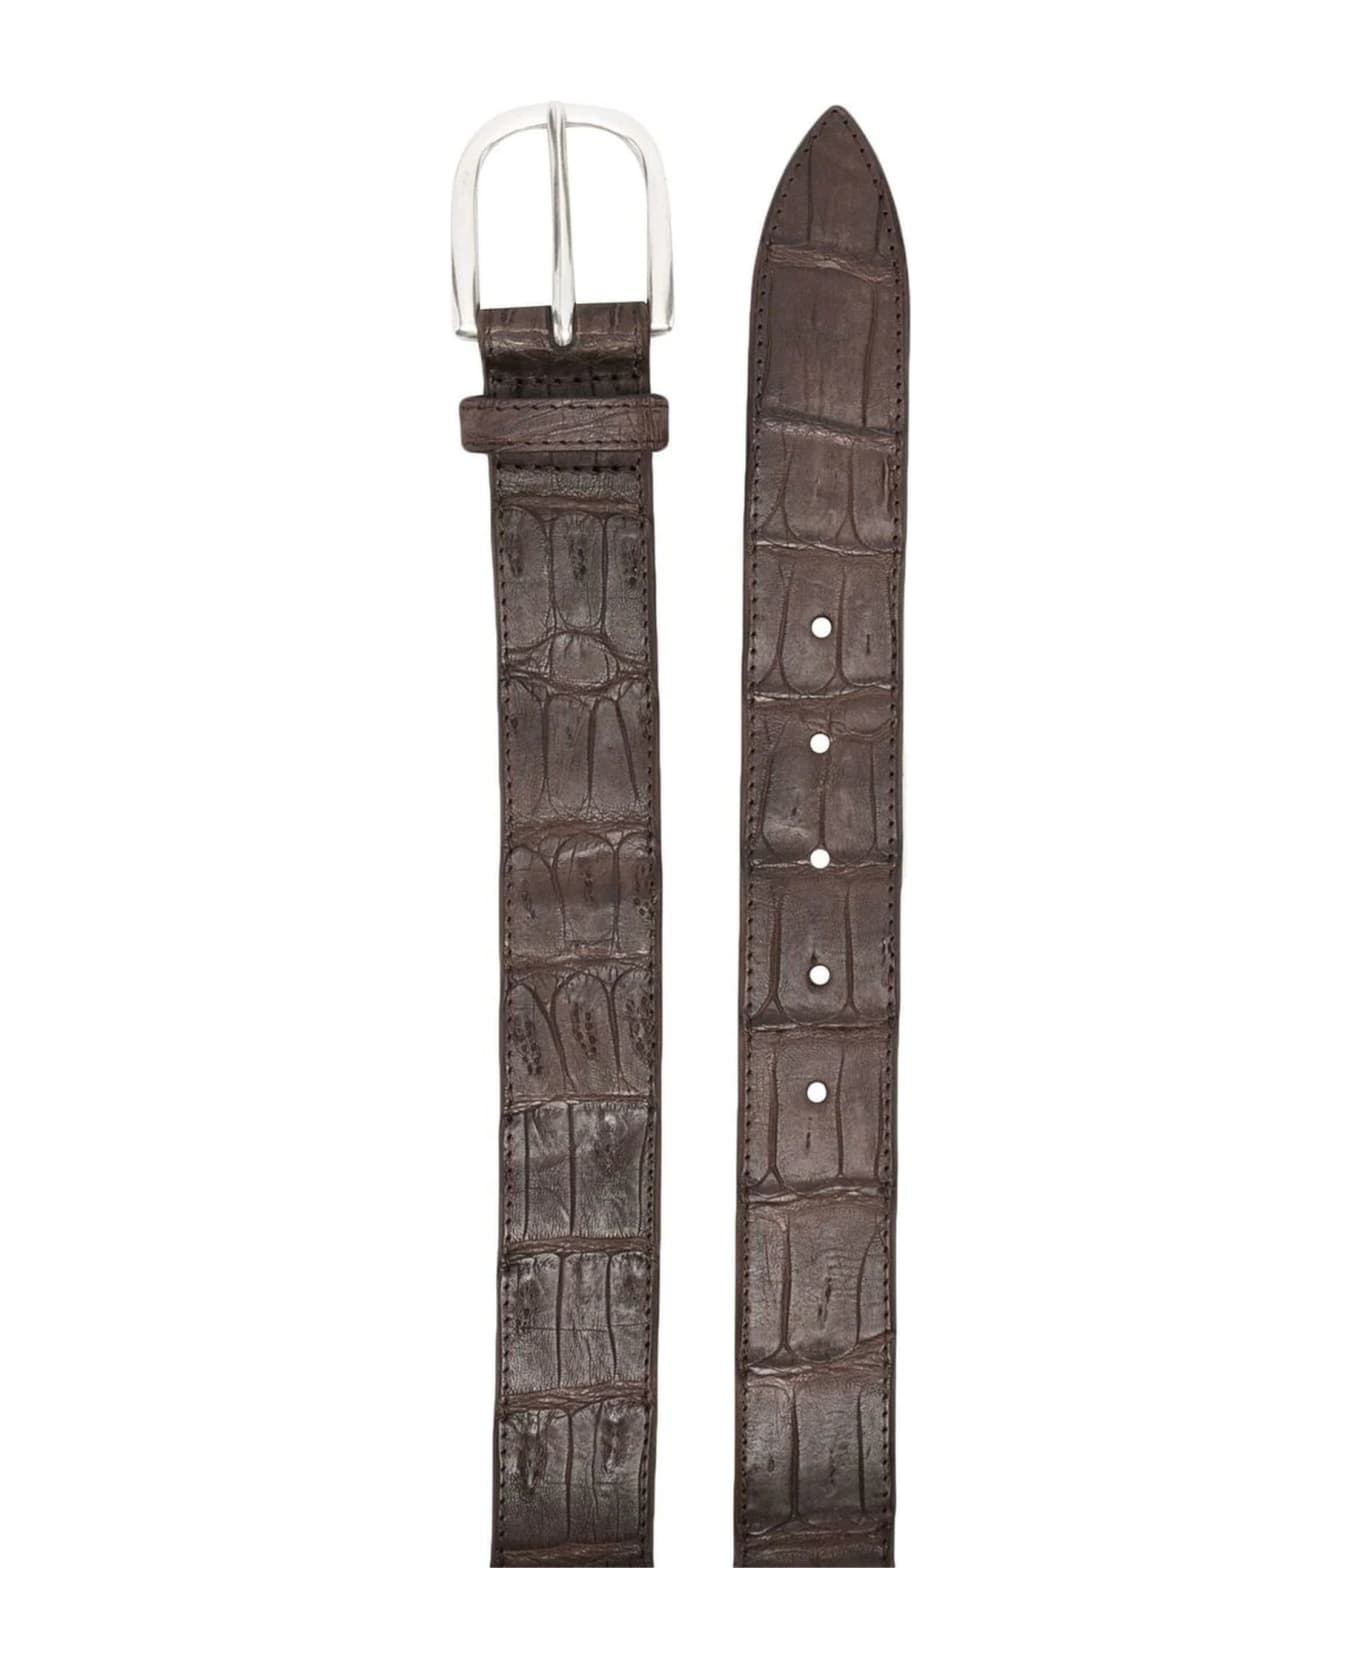 Orciani Cocco Coda Color Classic Crocodile Leather Belt - Brown